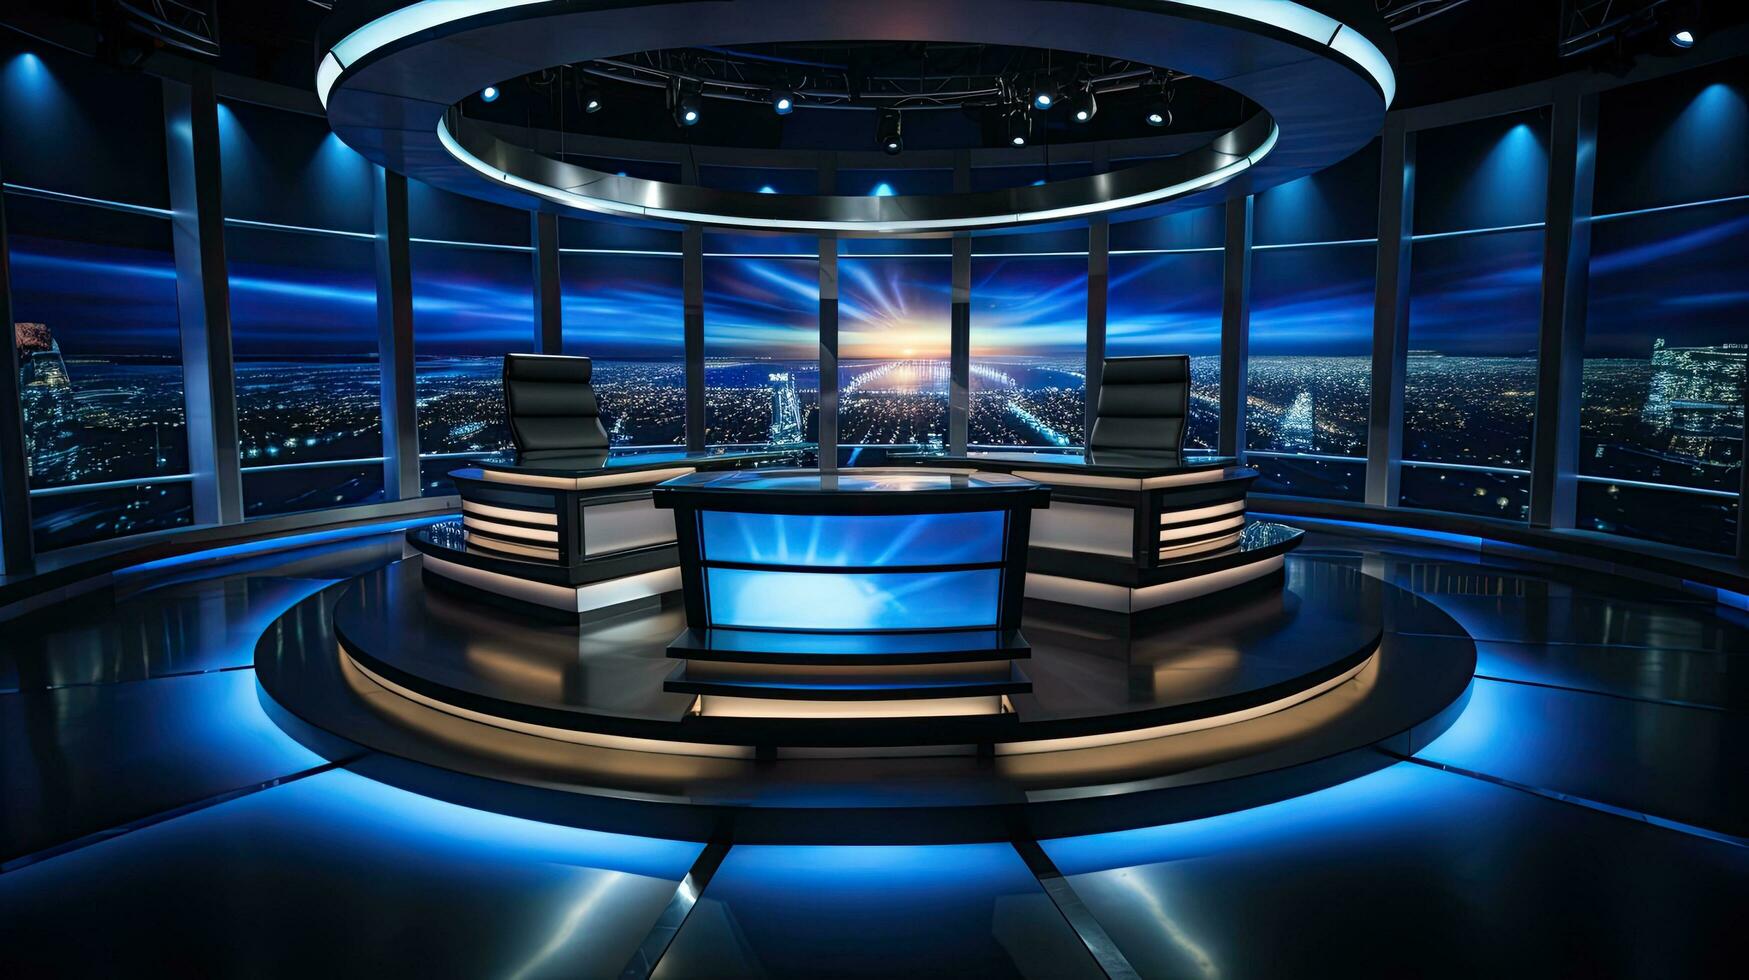 modern televisie studio voor wereld breken nieuws met uitrusting voor leidend verslaggevers en omroepers foto